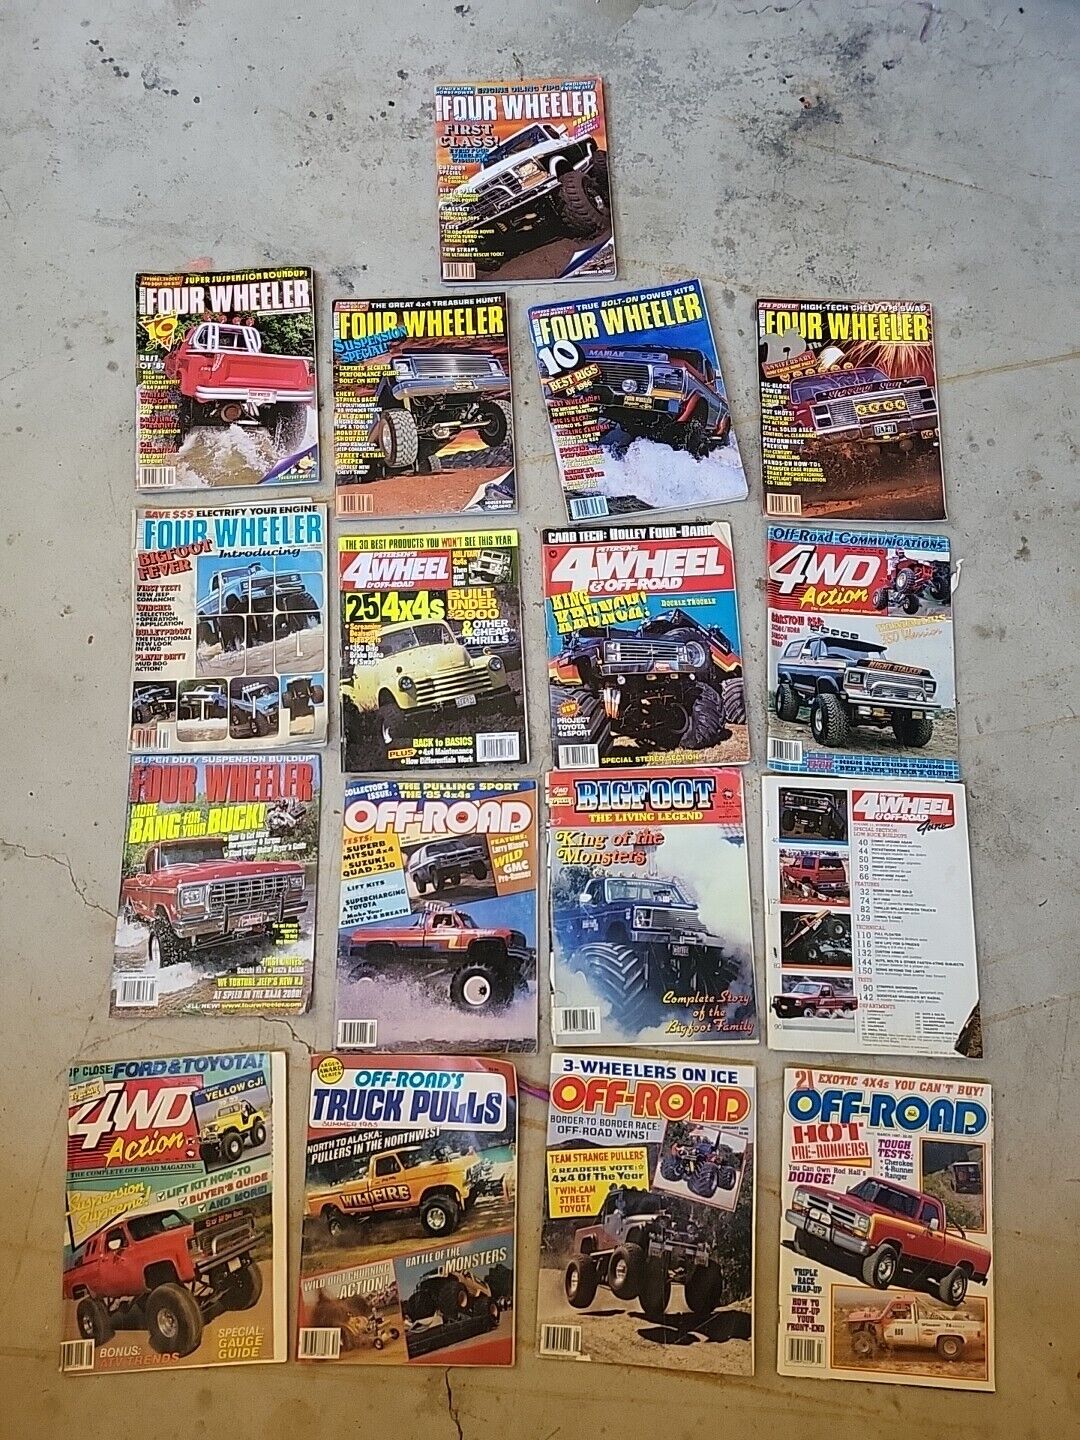 VTG Lot 1980s Four Wheeler, 4Wheel, Off-road 4WD, Bigfoot Truck Pulls Magazines 